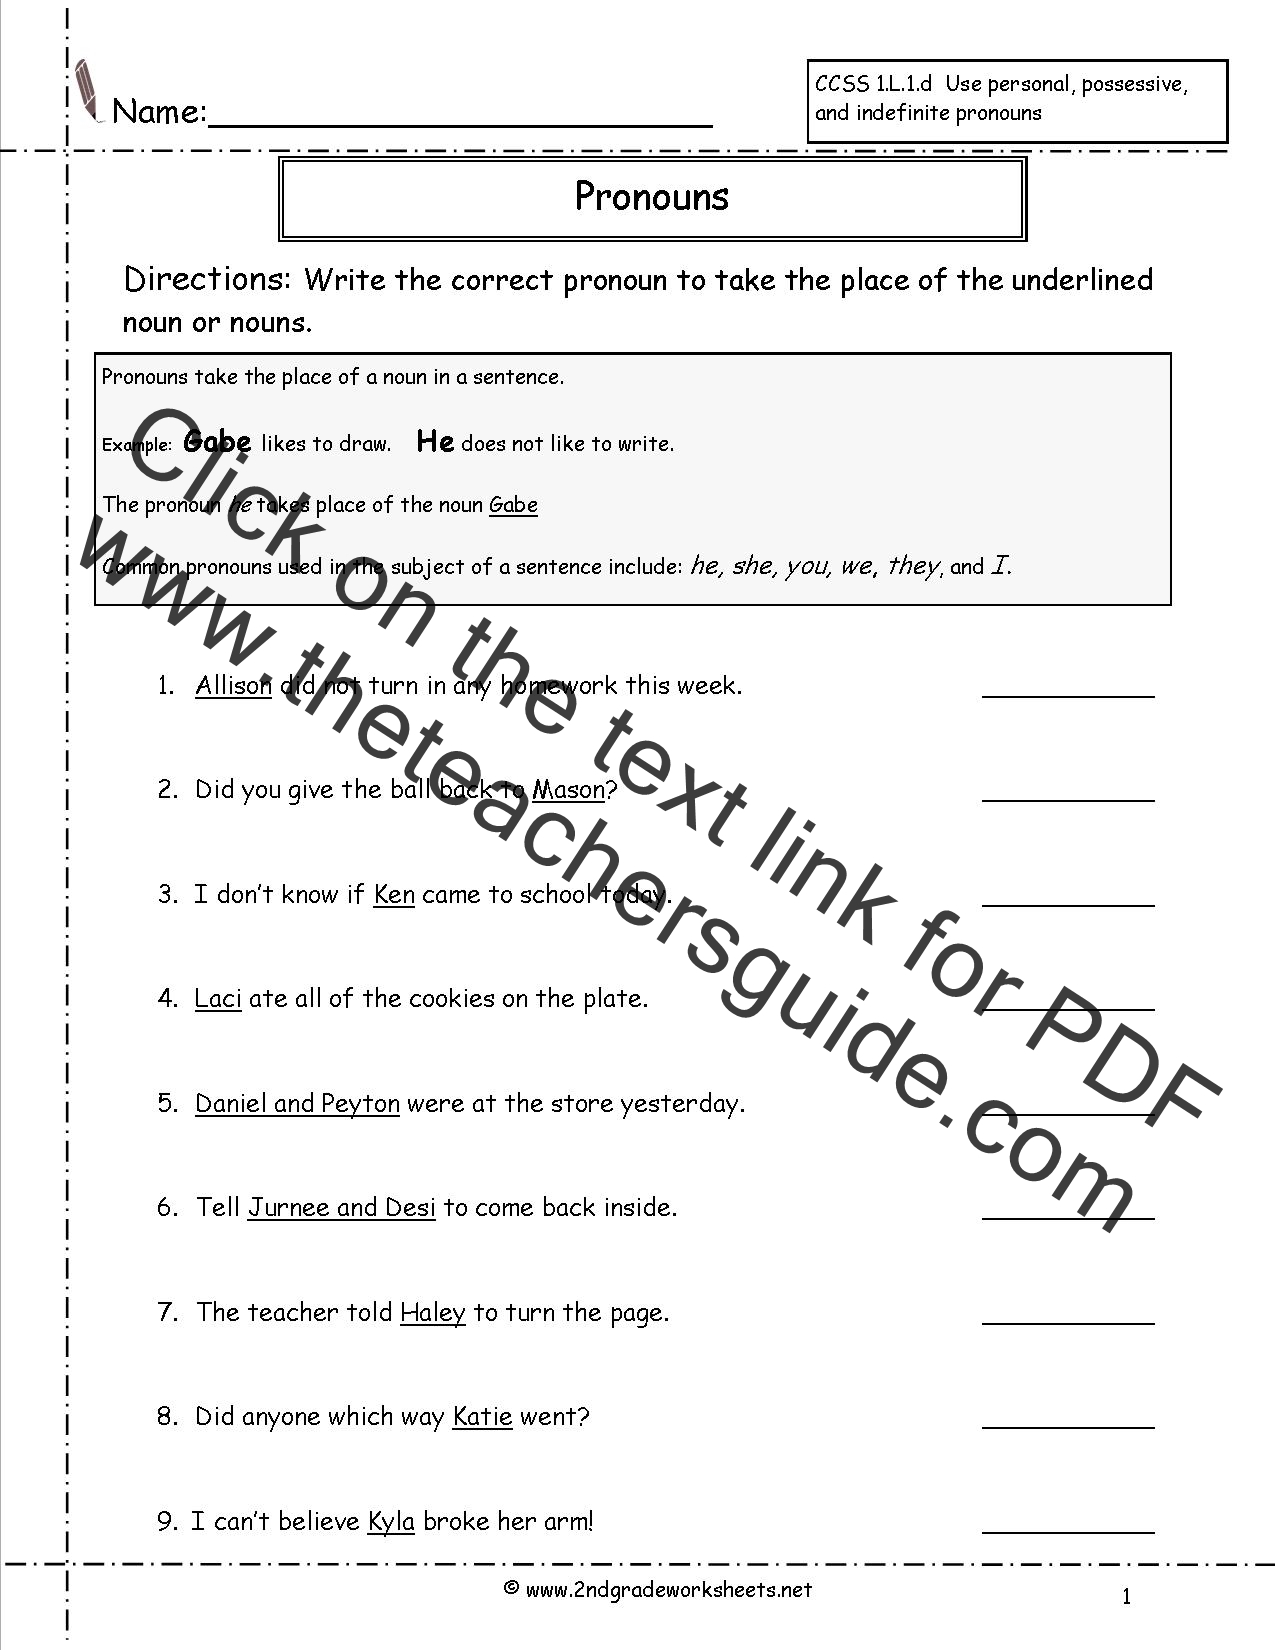 free-printable-pronoun-worksheets-for-2nd-grade-lexia-s-blog